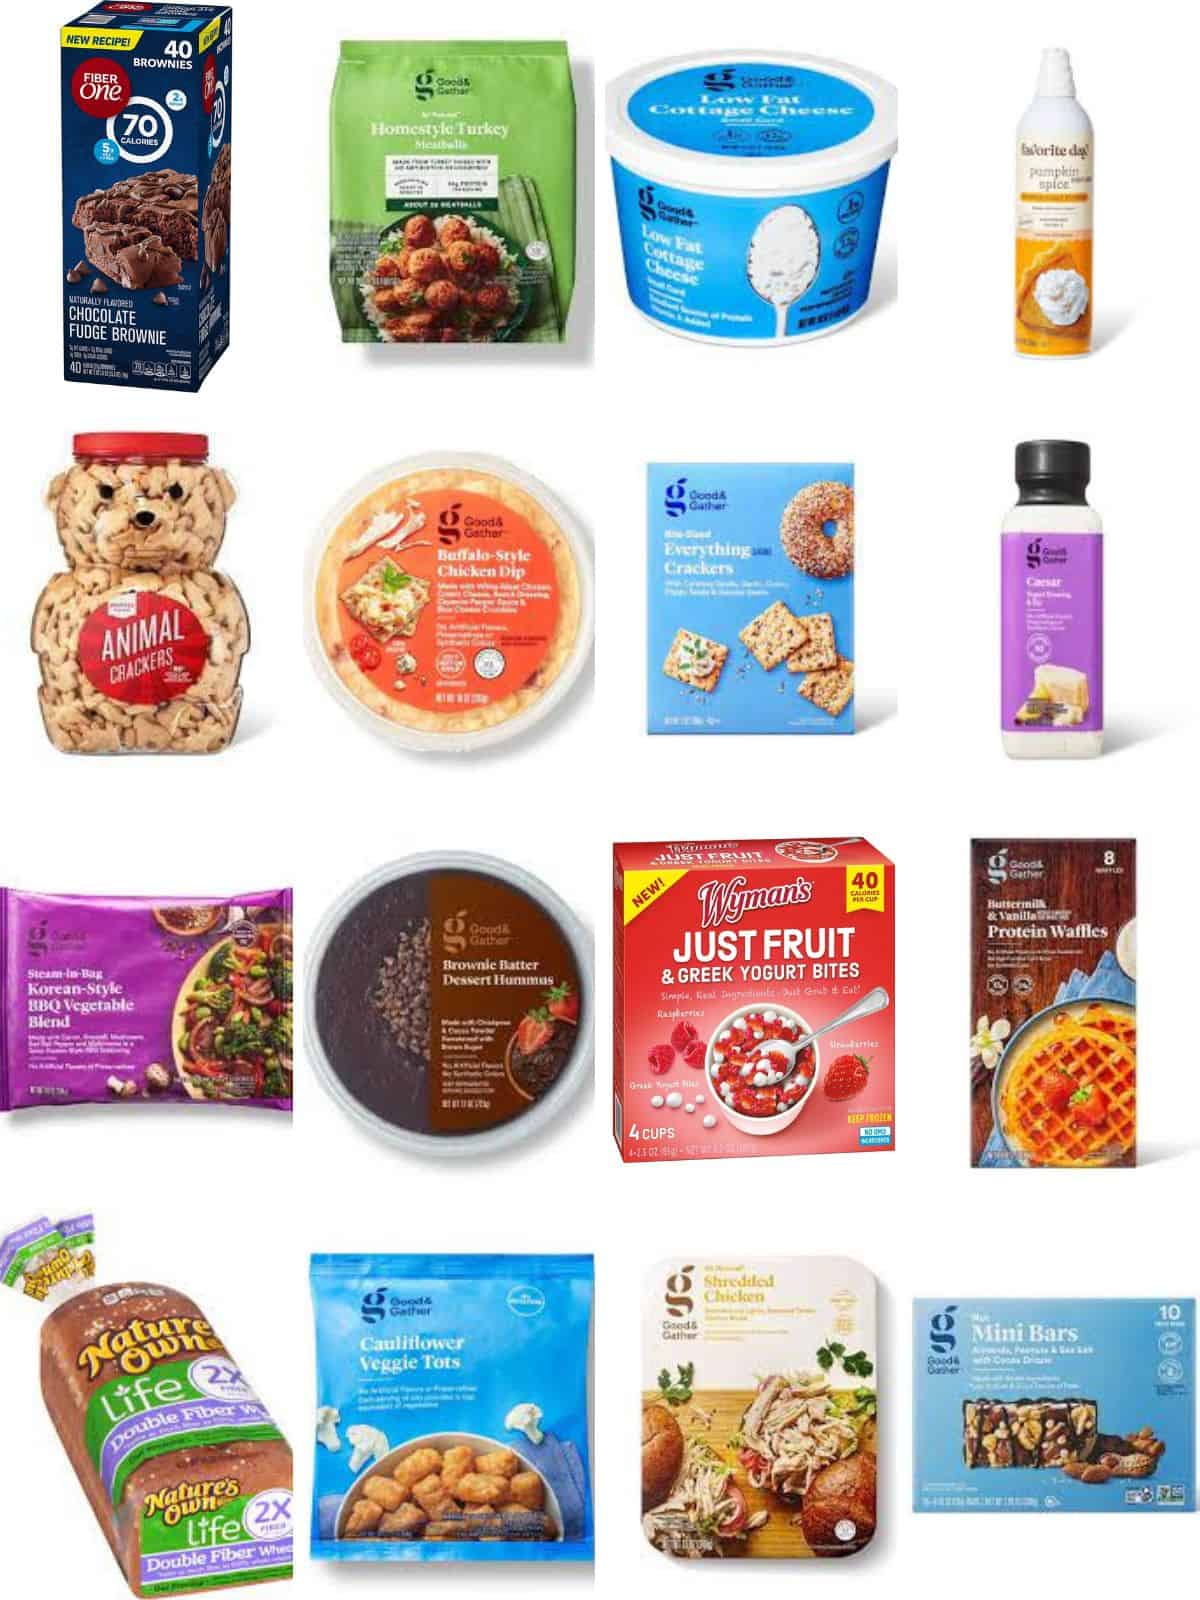 Best Weight Watchers foods from Target